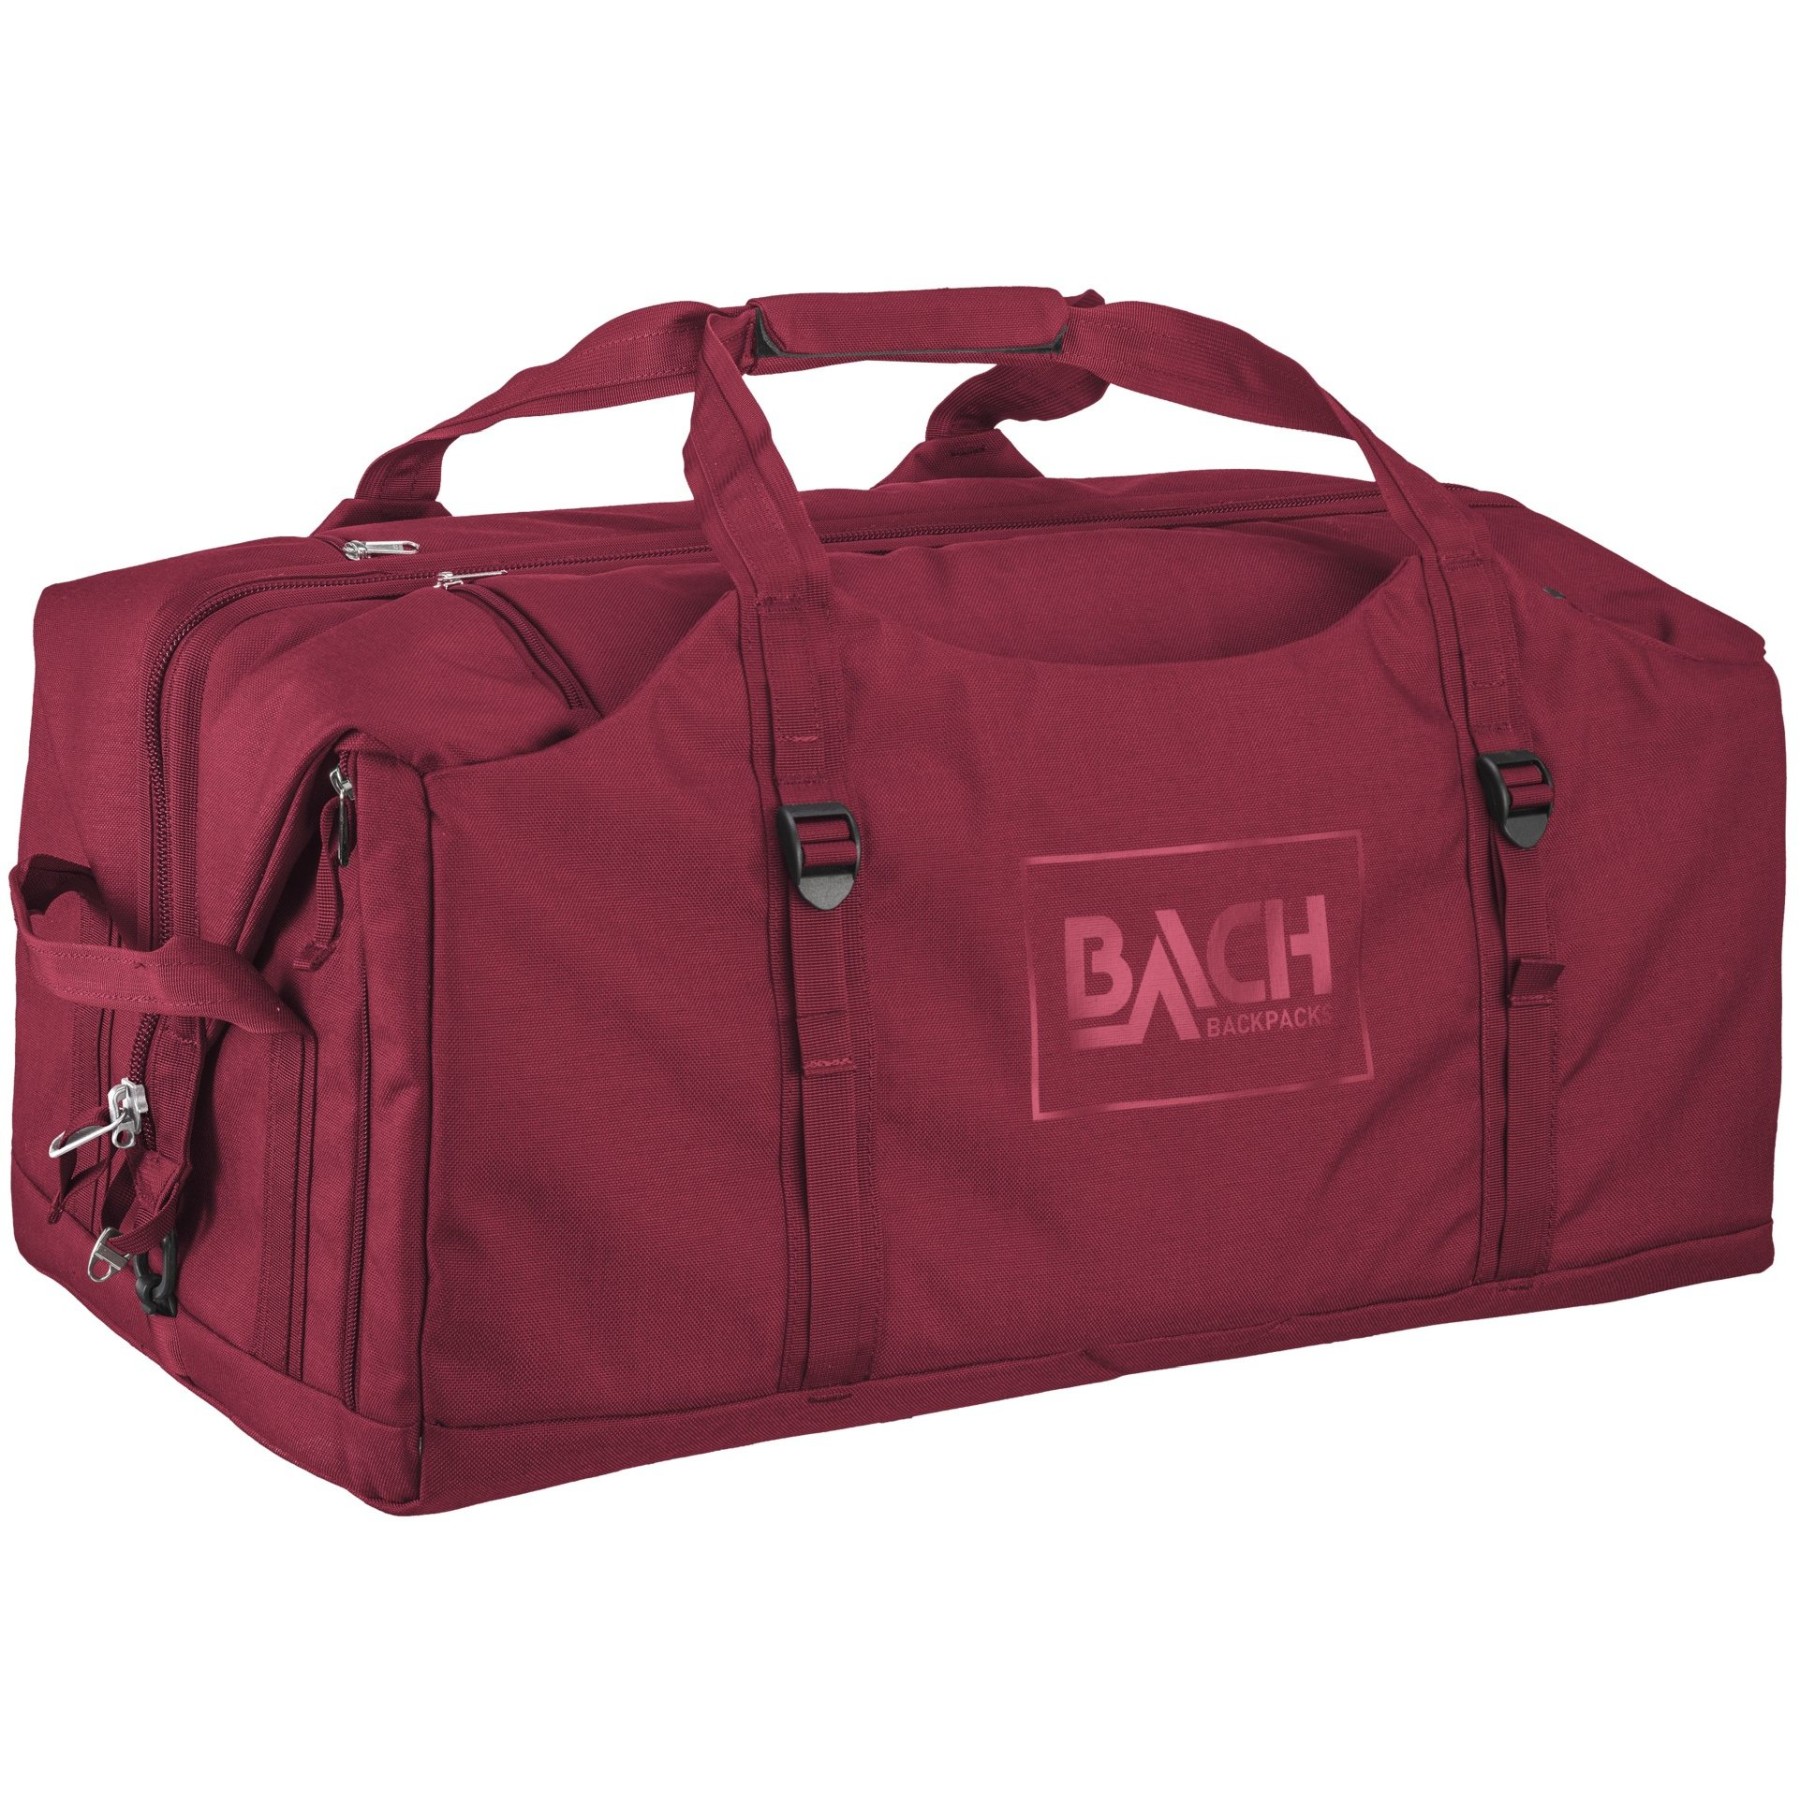 Bach Dr. Duffel 30 Travel Bag - sand beige | BIKE24